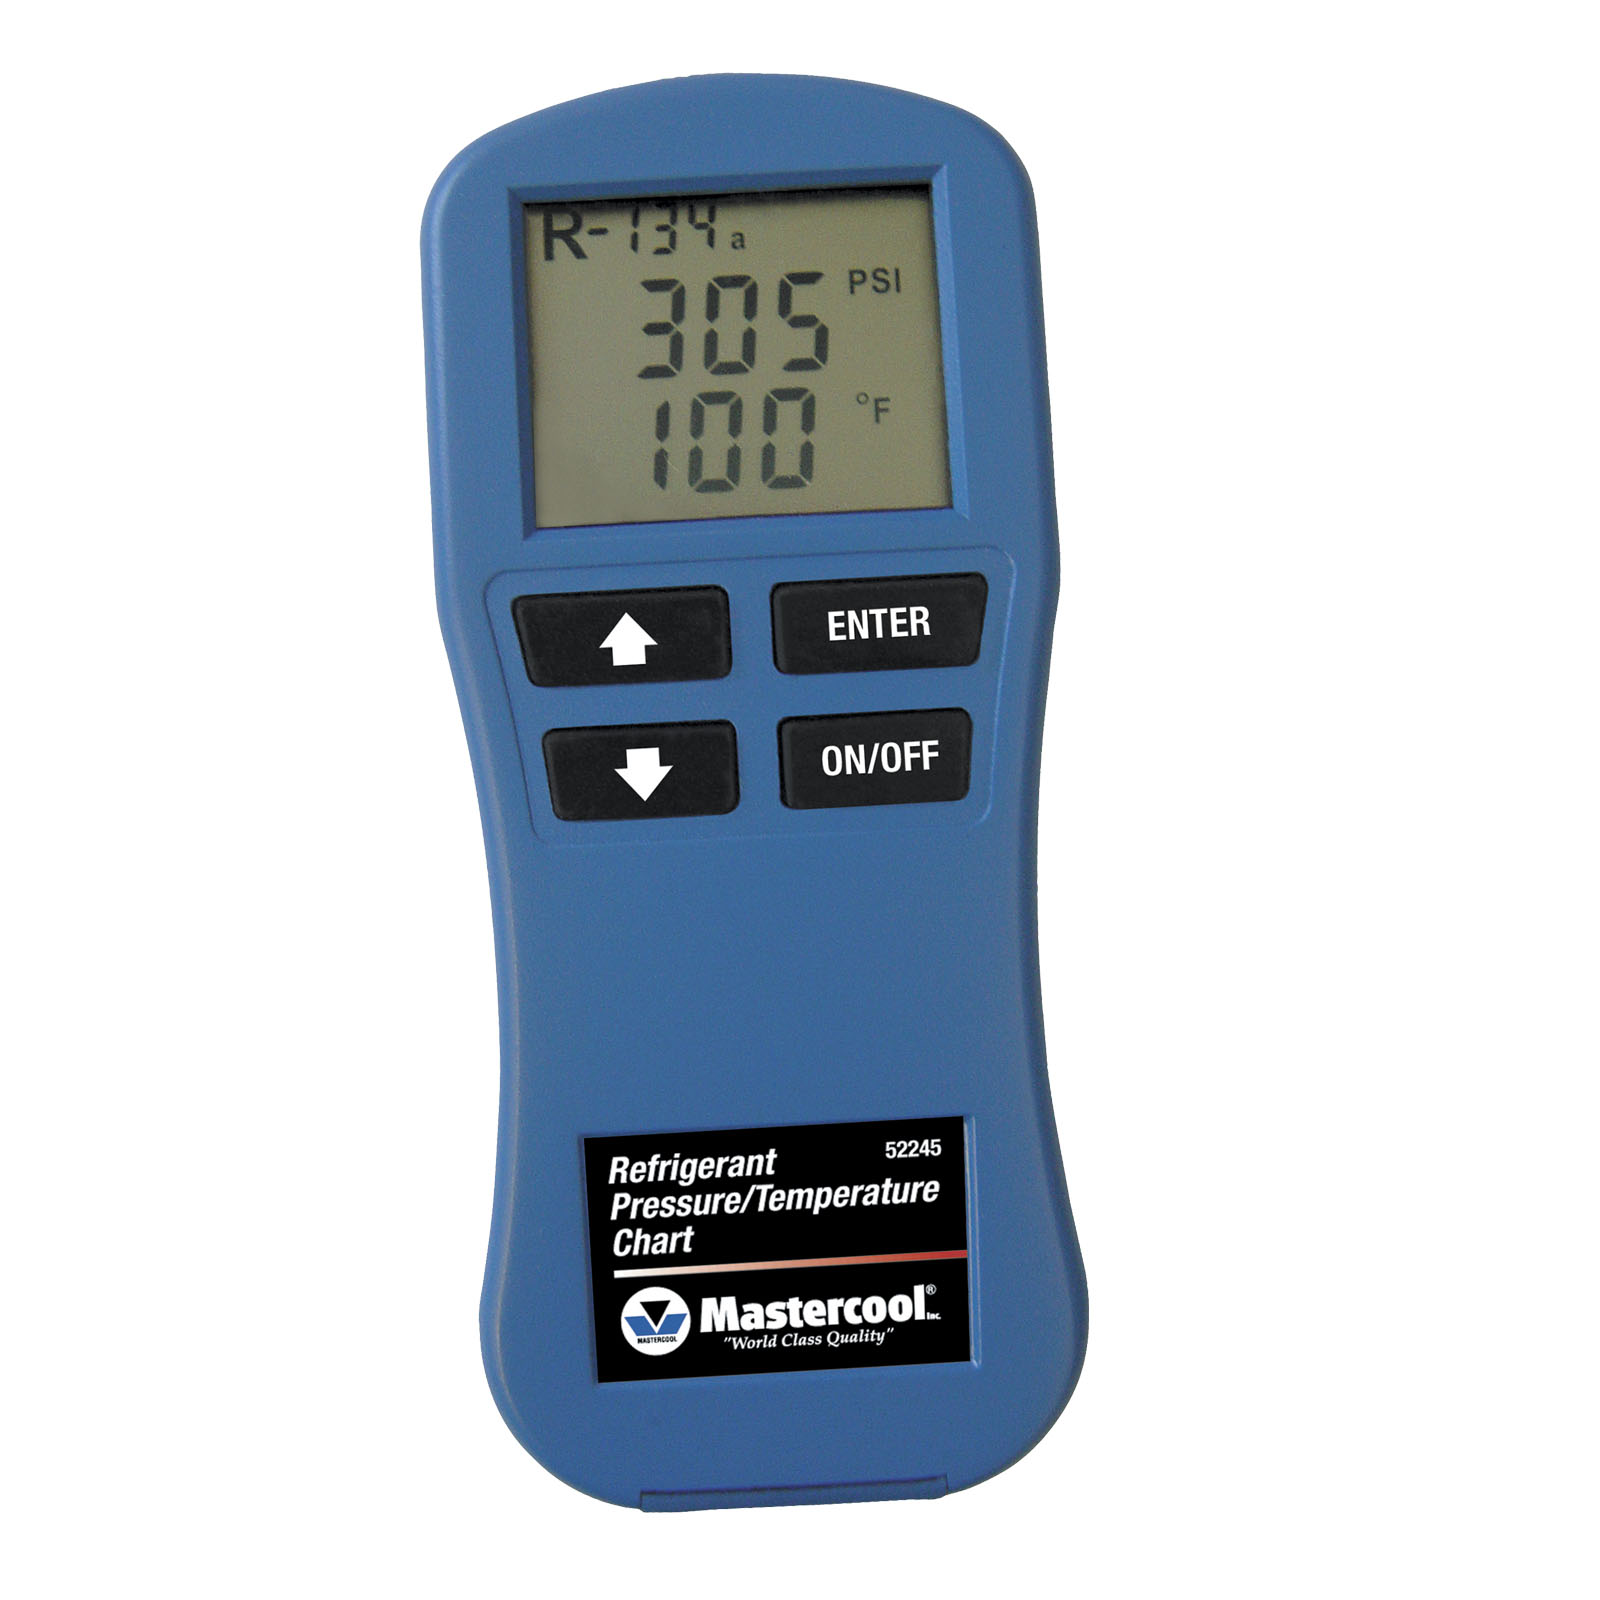 R143a Temperature Pressure Chart